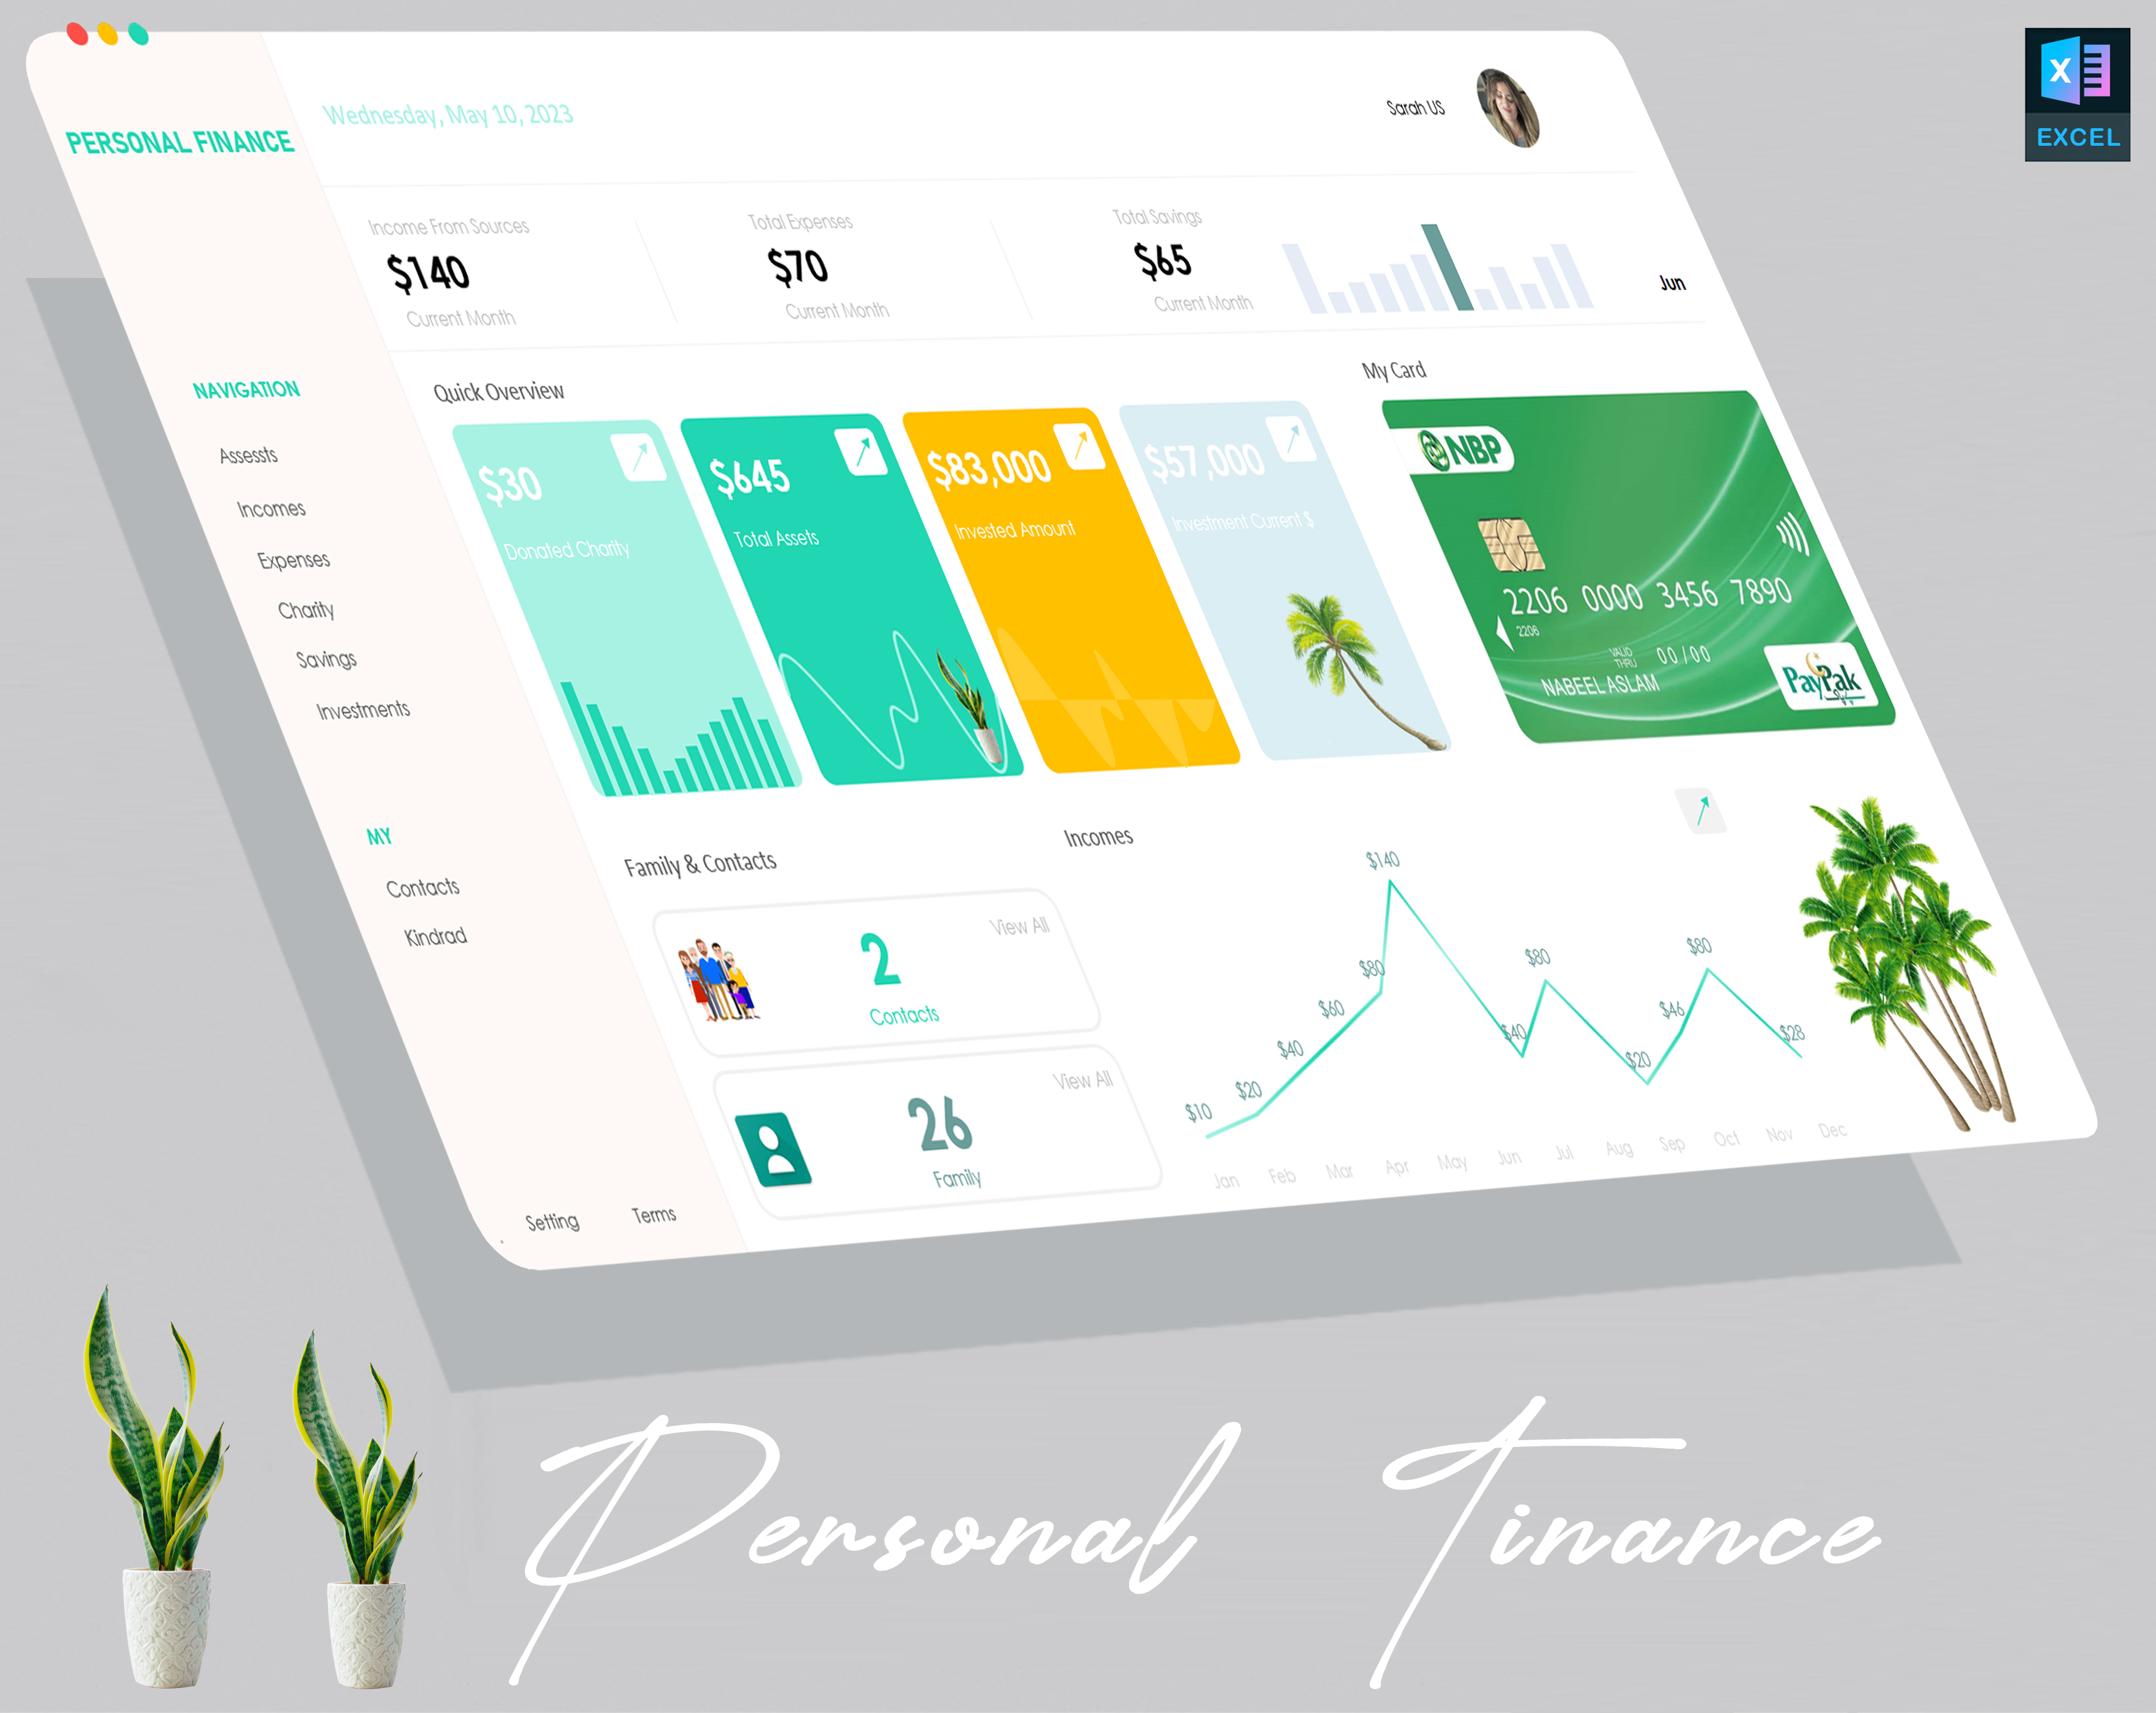 Personal Finance Dashboard